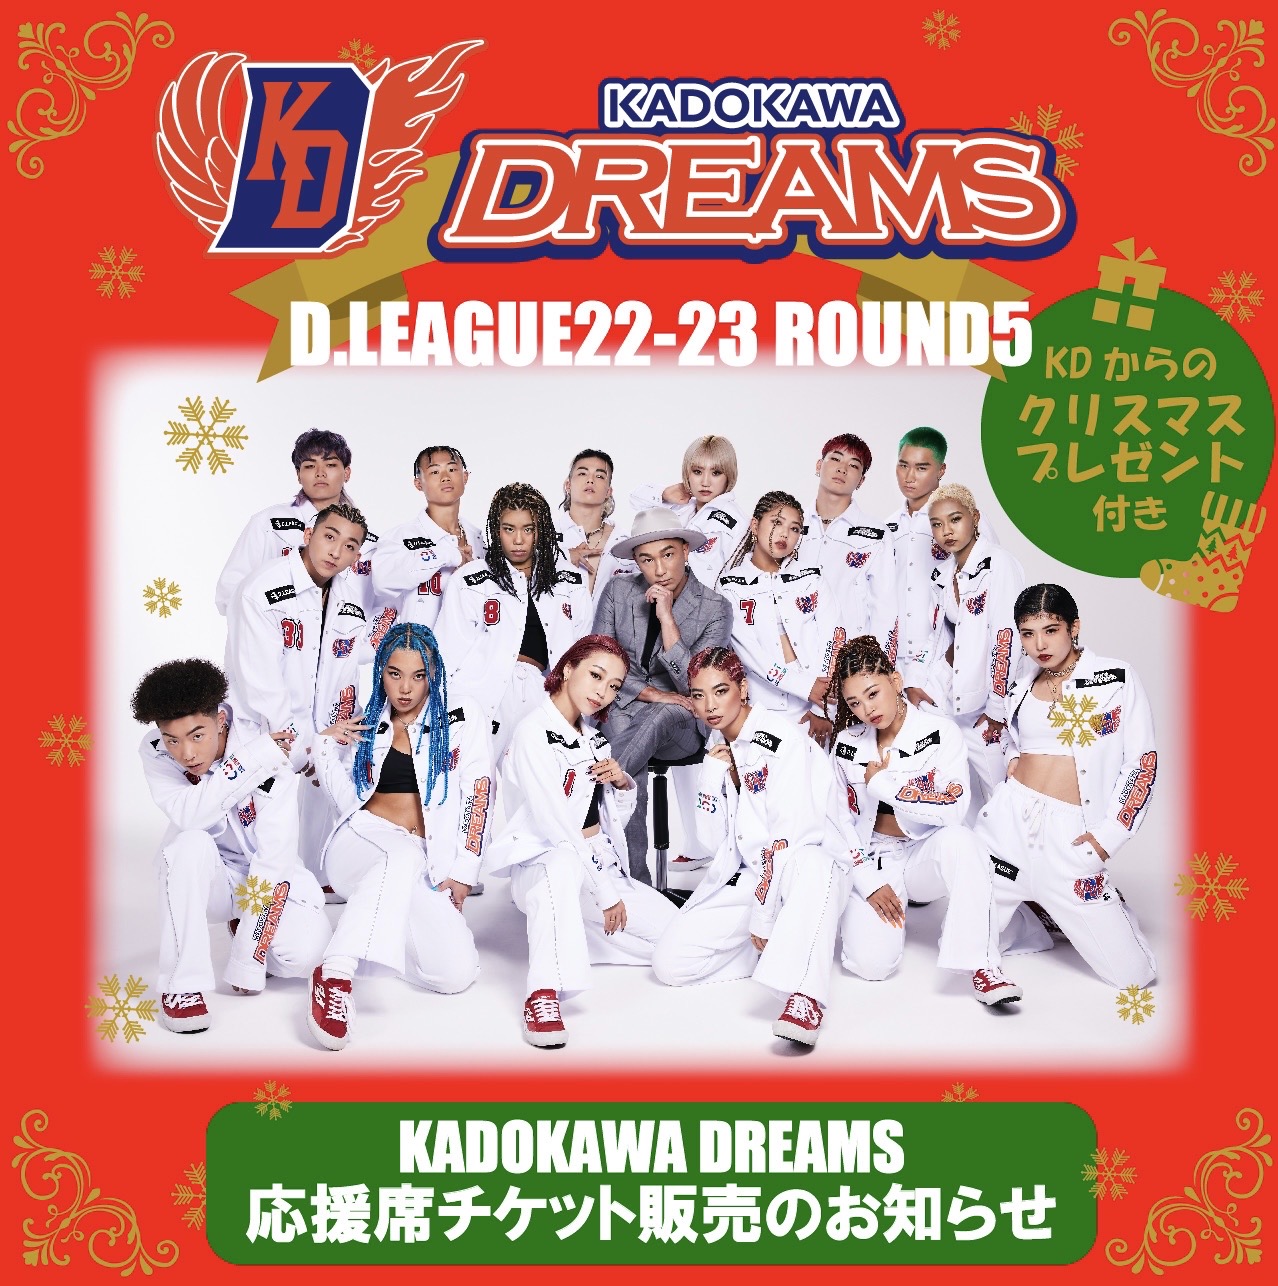 D.LEAGUE 22-23 ROUND5 KADOKAWA DREAMS応援席のご案内】 | D.LEAGUE